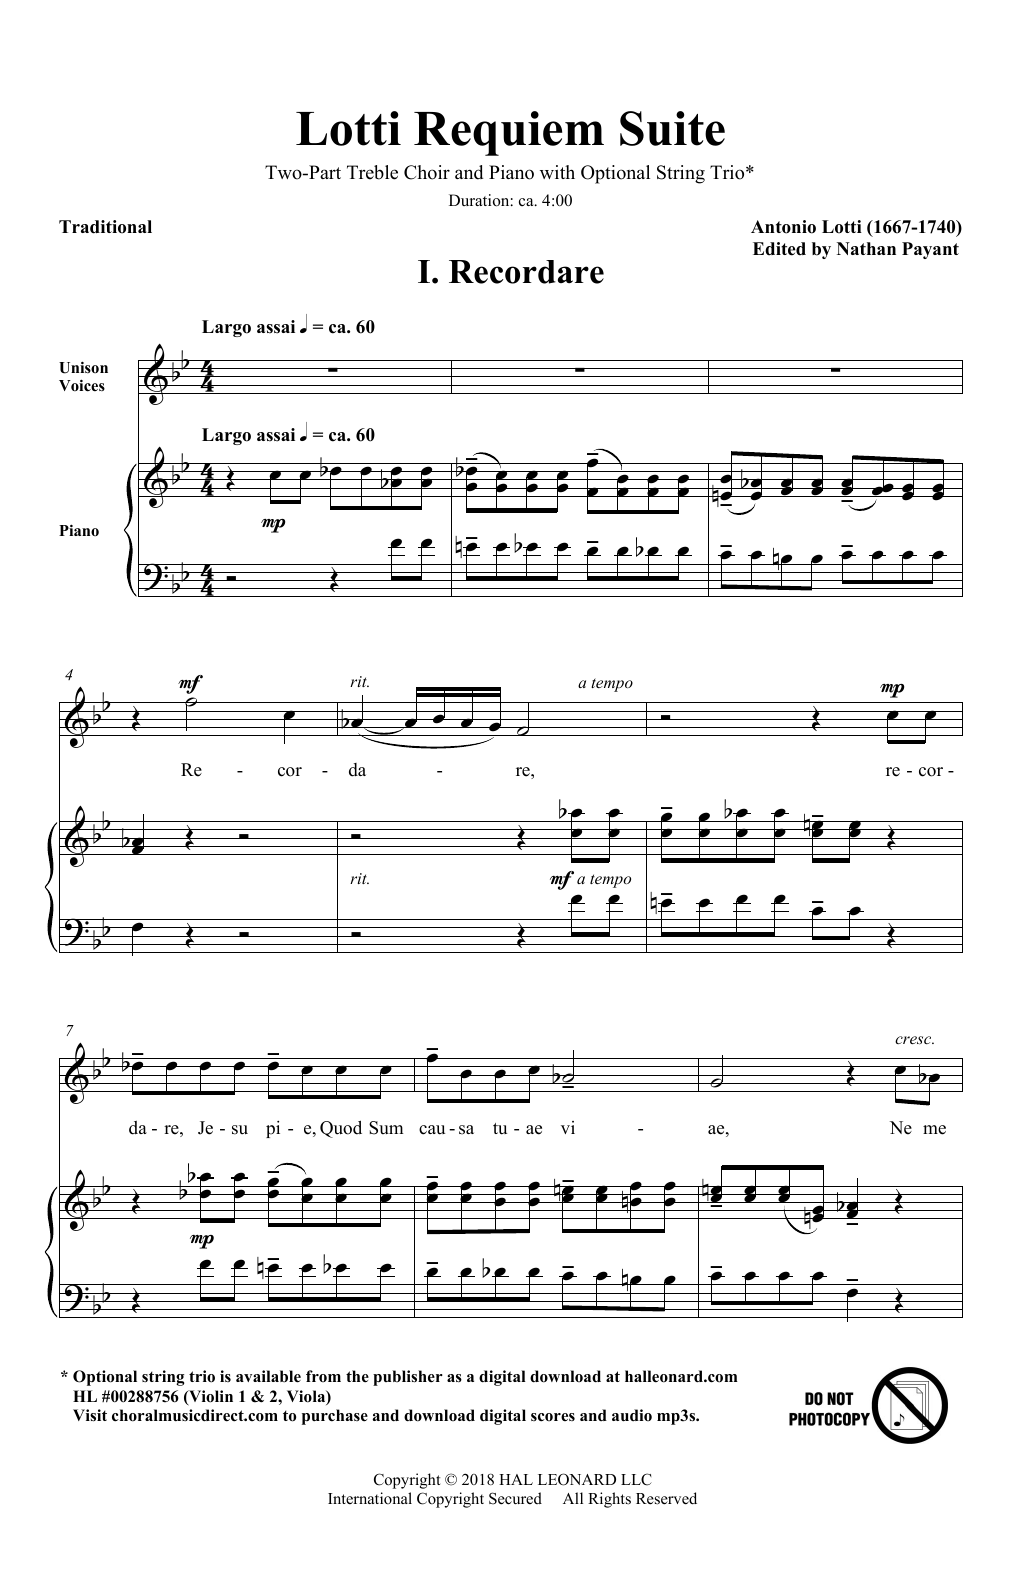 Antonio Lotti Lotti Requiem Suite (arr. Natahn Payant) Sheet Music Notes & Chords for 2-Part Choir - Download or Print PDF